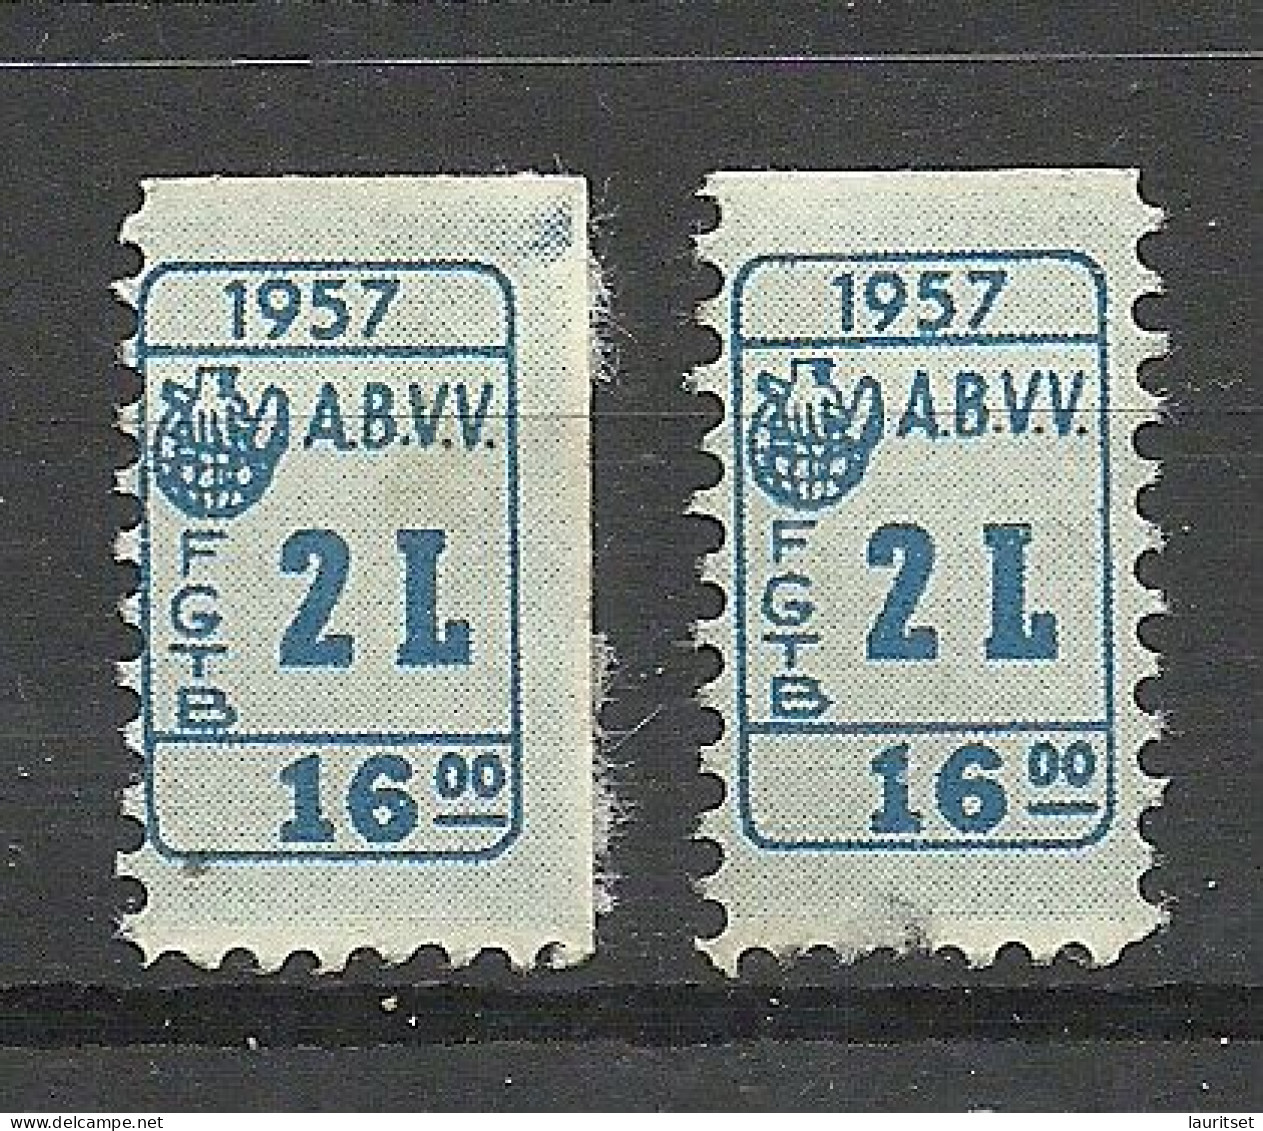 USA Or Great Britain 1957, 2 Consumer Stamps (*) - Erinnofilia